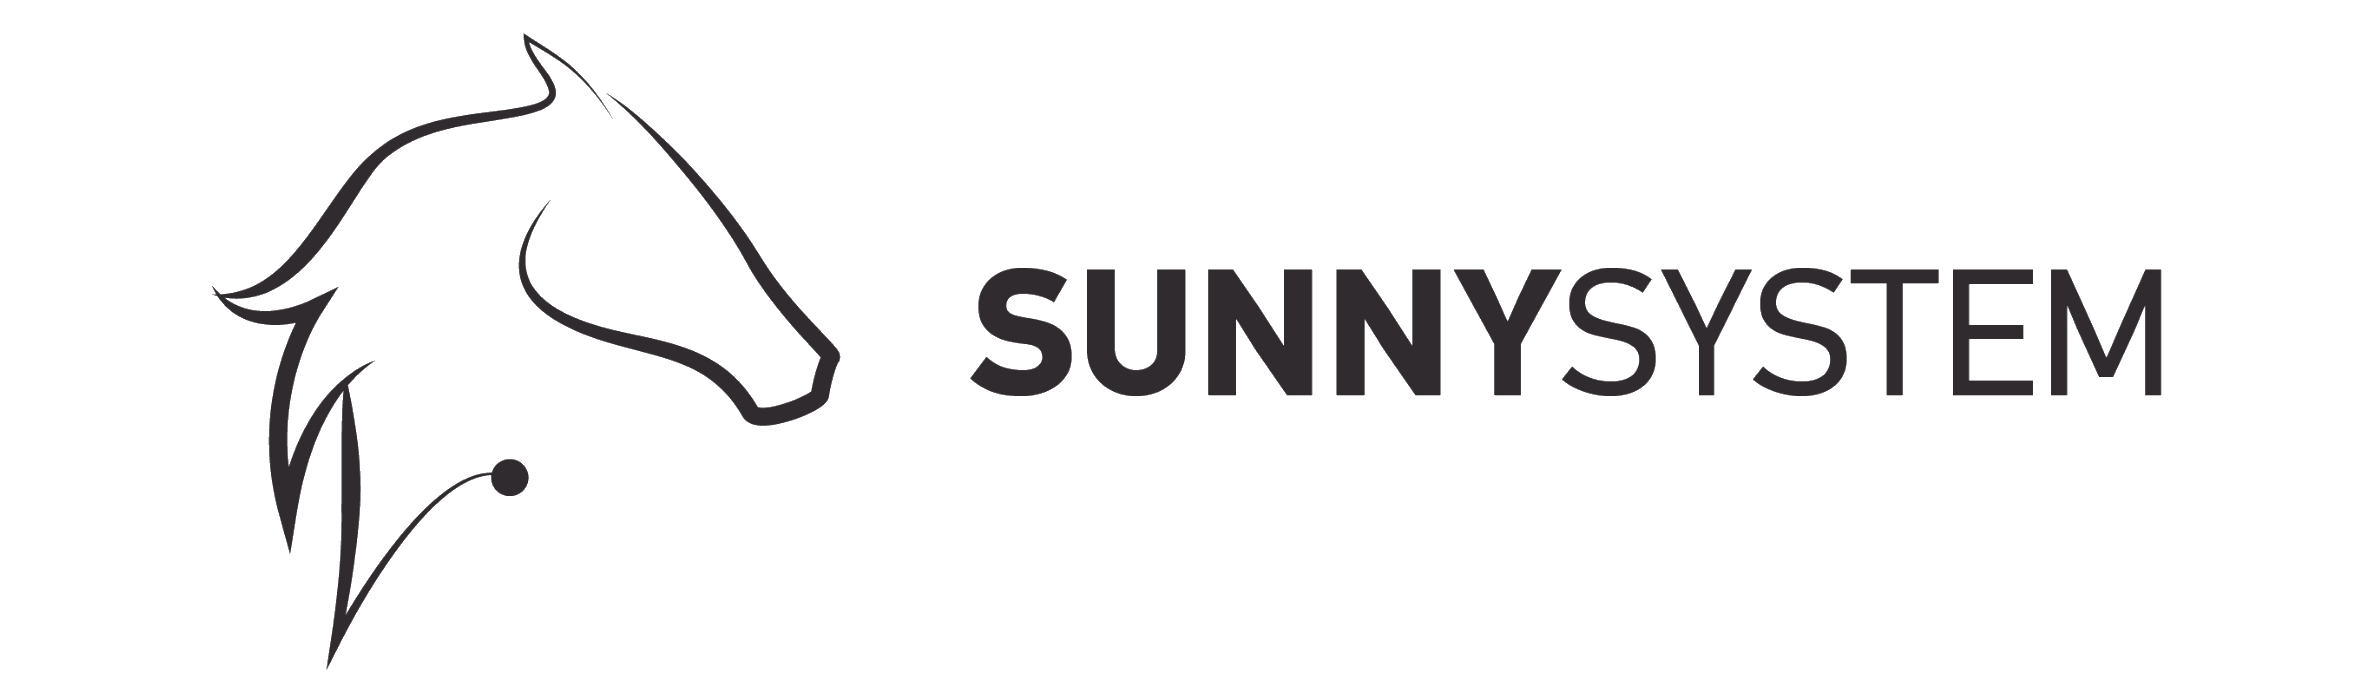 Immagine illustrativa Sunny System